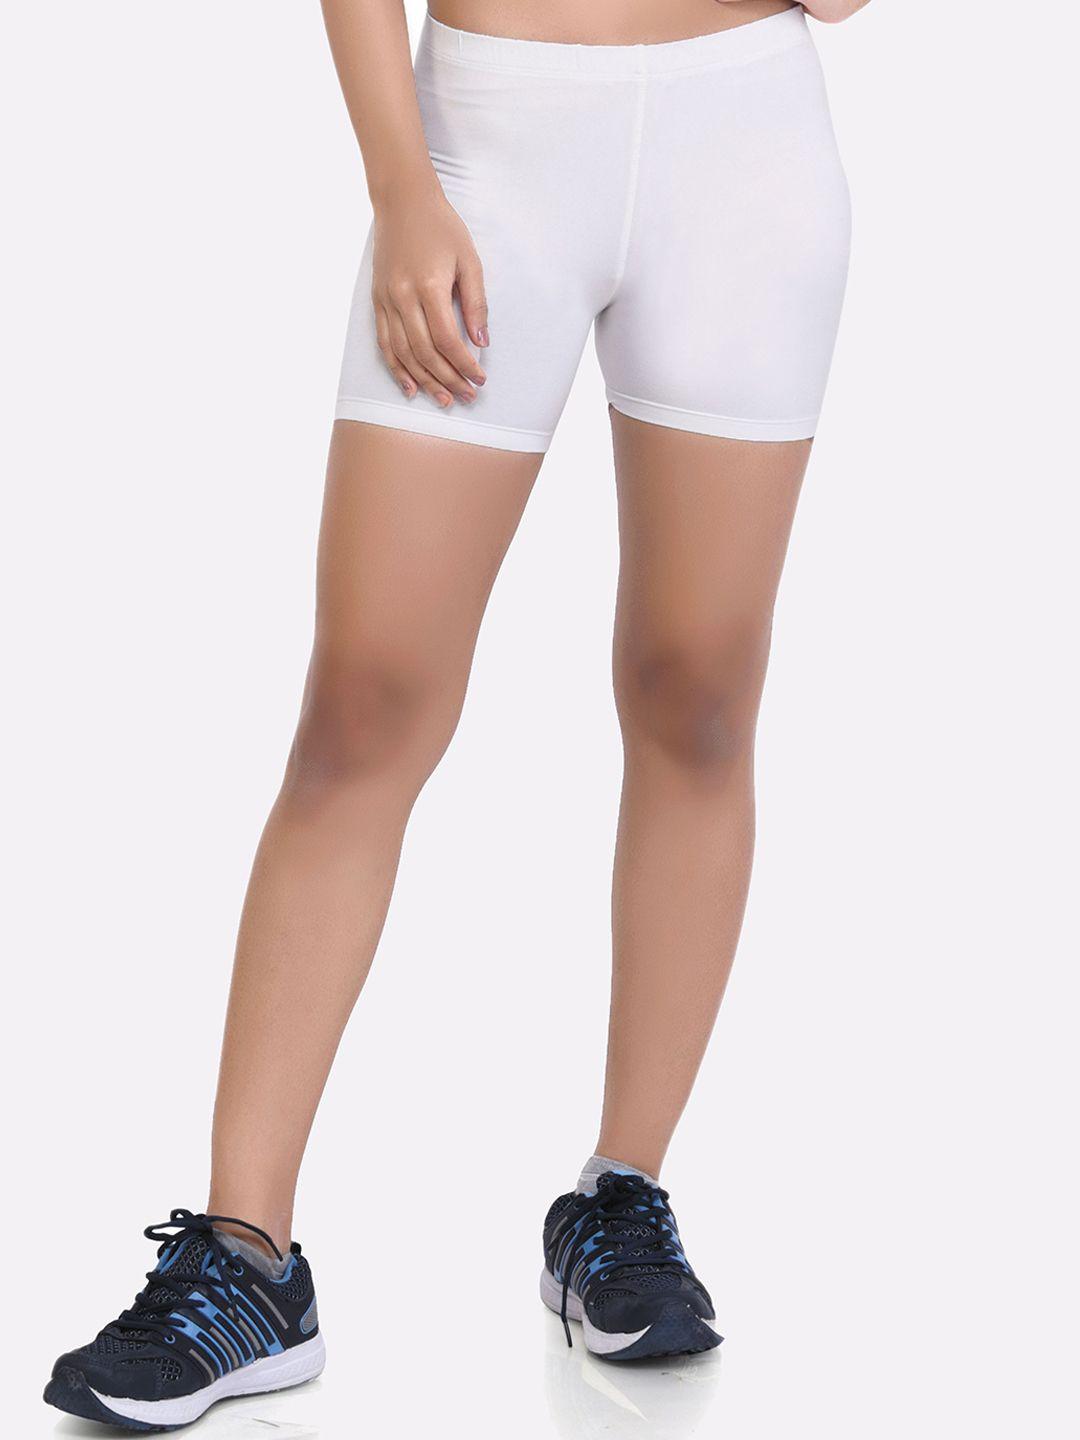 laasa sports women white skinny fit training or gym hot pants shorts